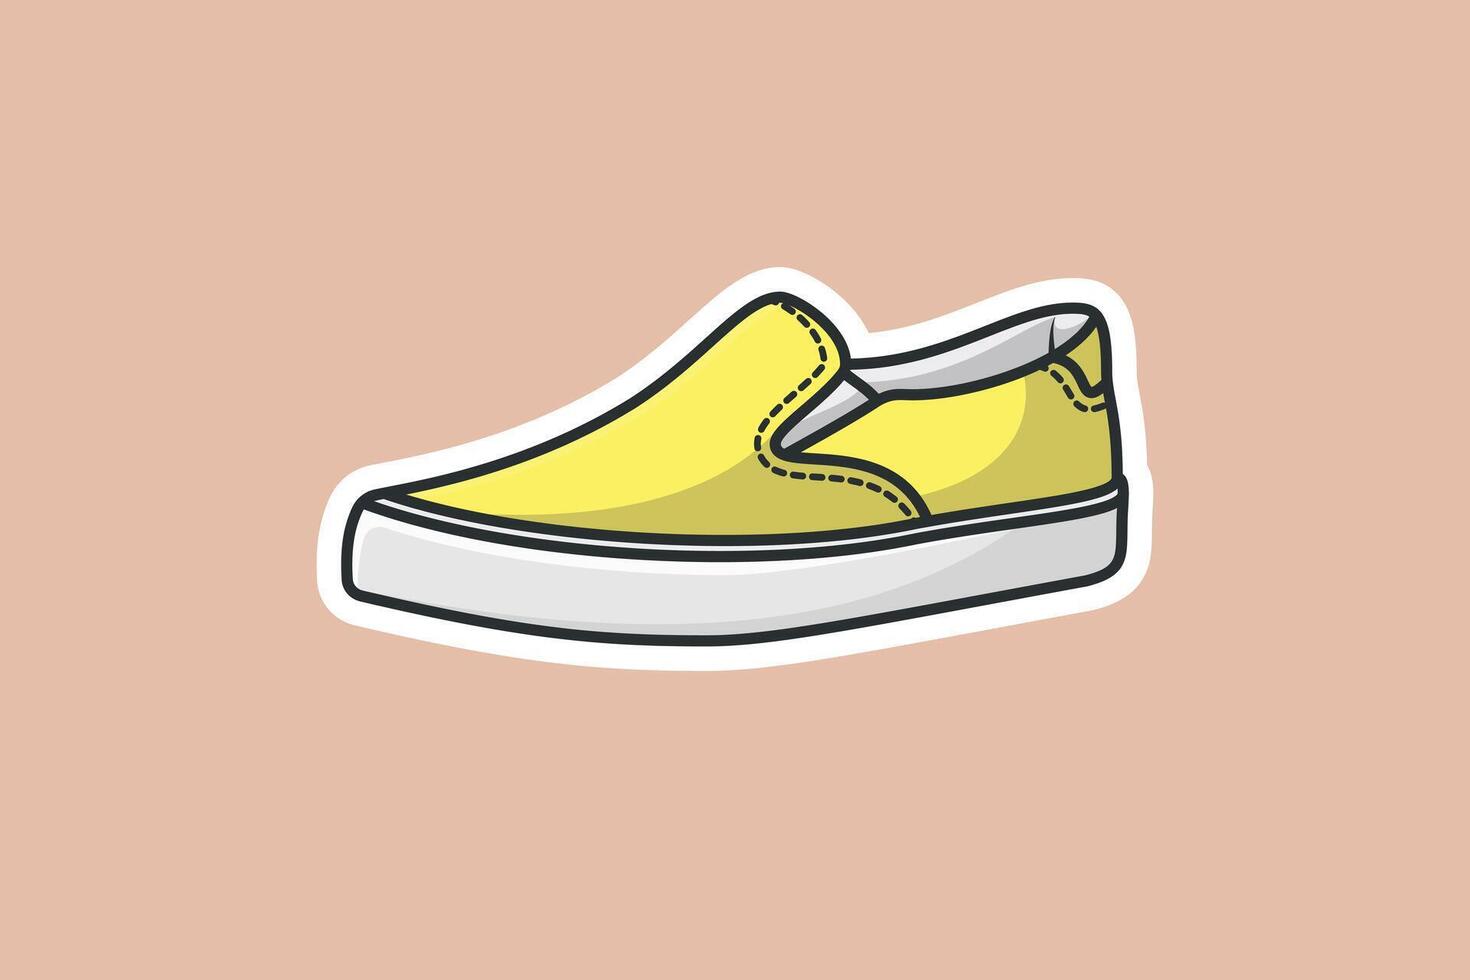 Running Shoe Sticker vector illustration. Fashion object Icon design concept. Boys outdoor fashion shoes sticker vector design with shadow.